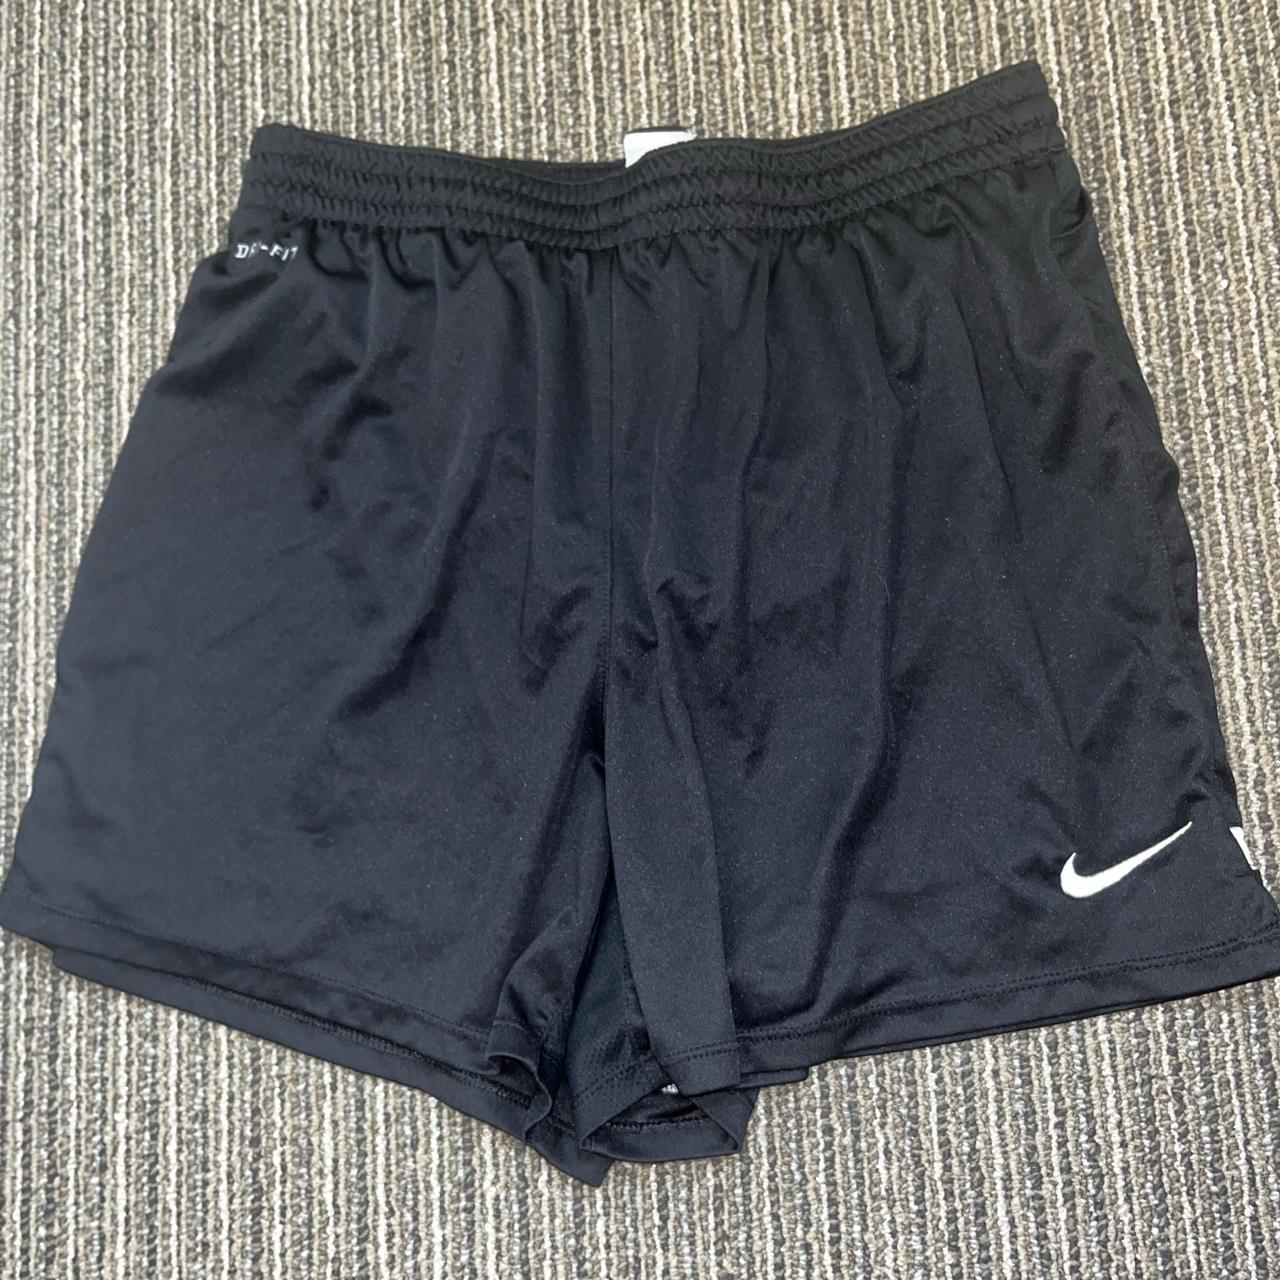 Nike soccer shorts with built in underwear #nike... - Depop